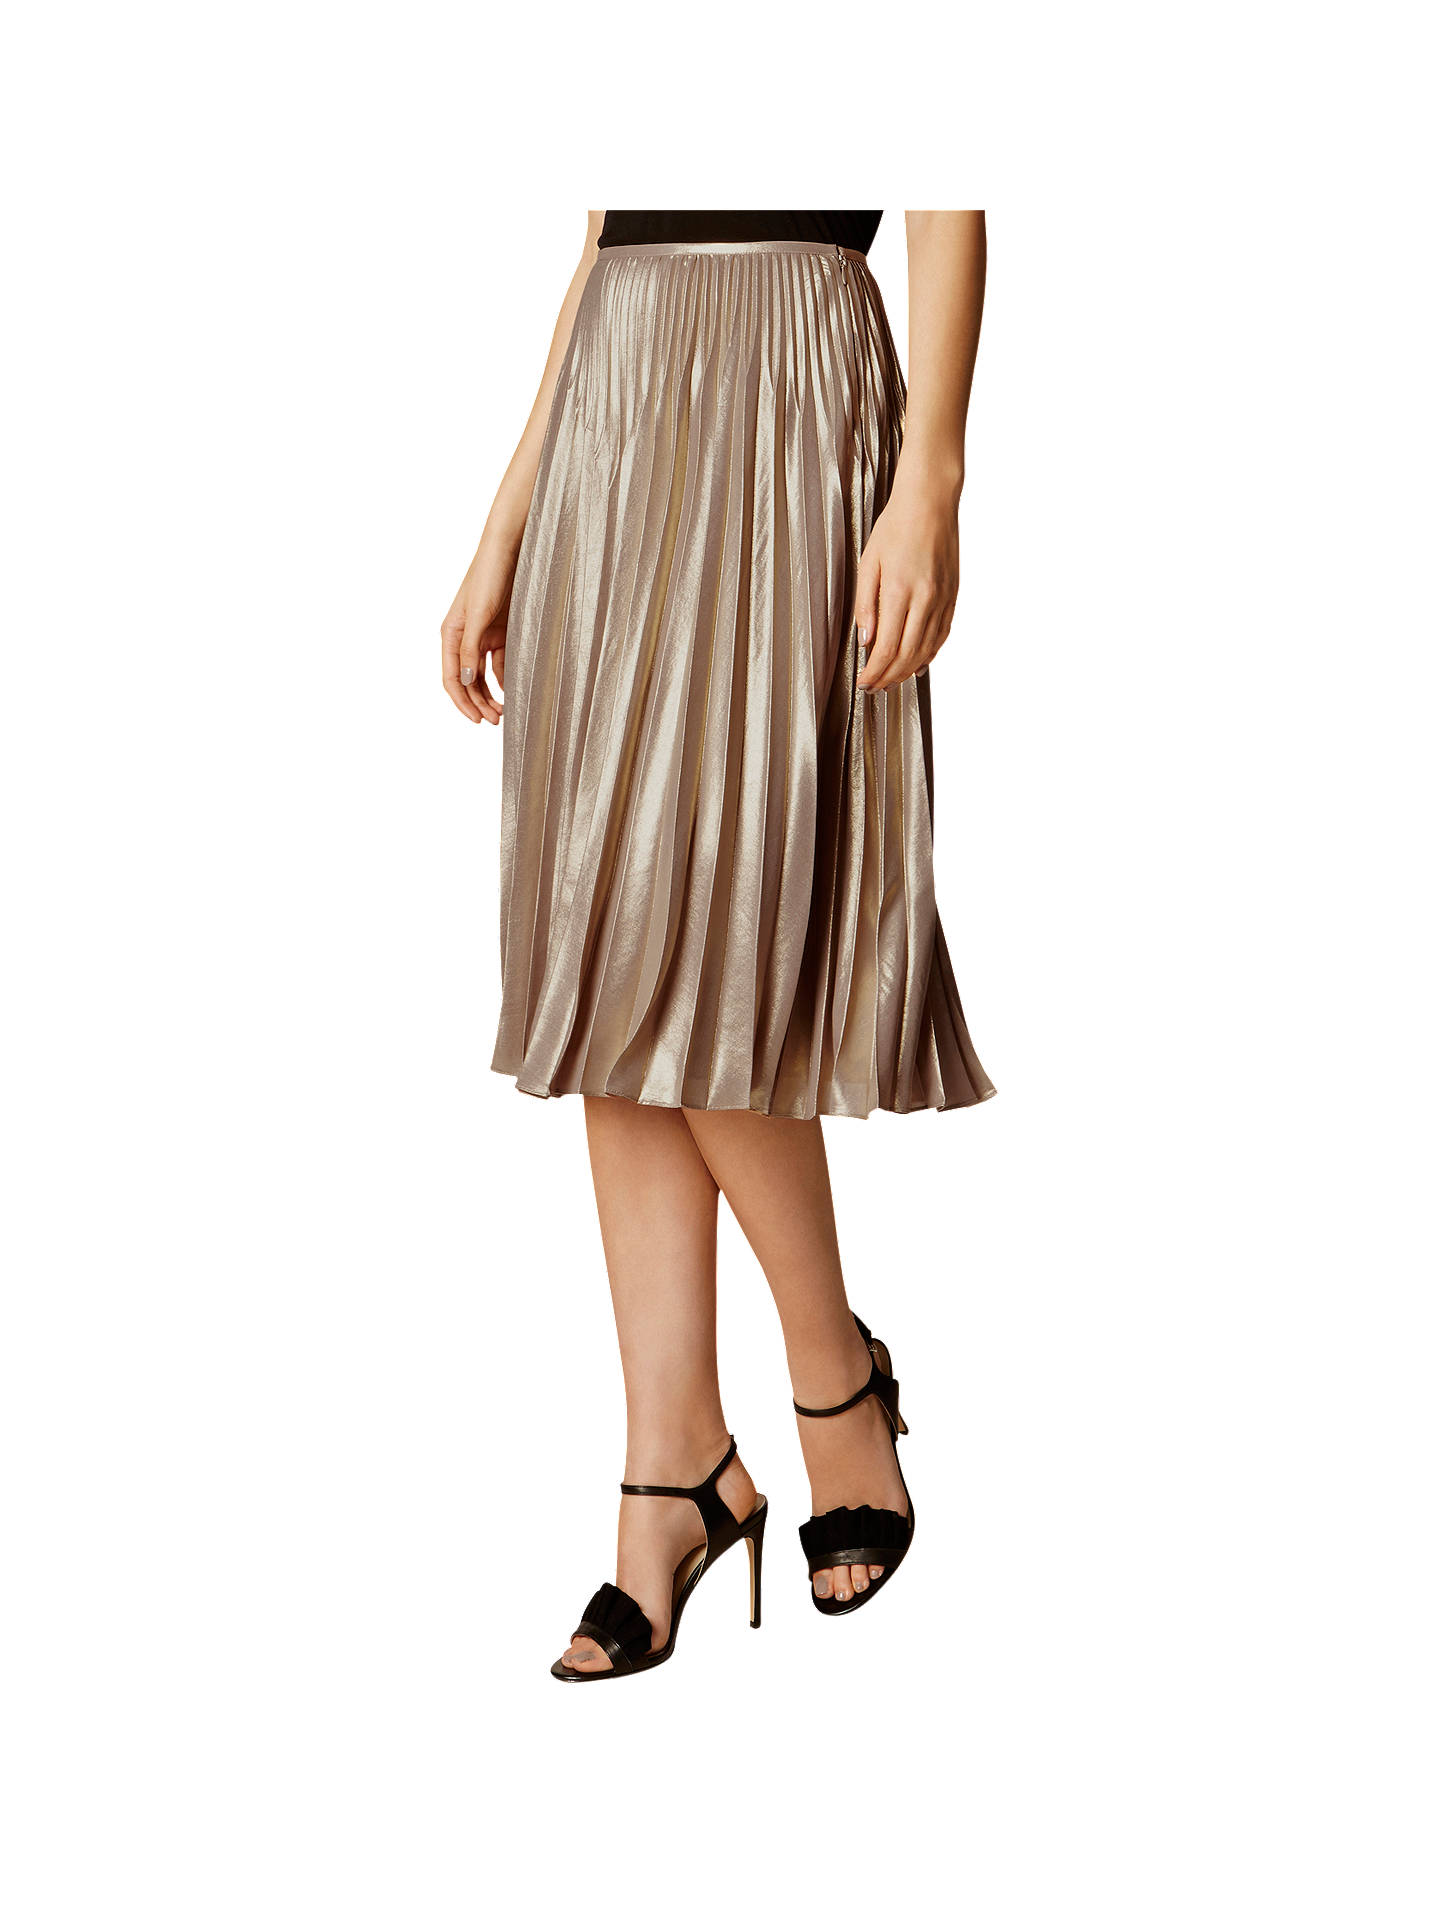 Karen Millen Metallic Pleated Skirt, Gold at John Lewis & Partners